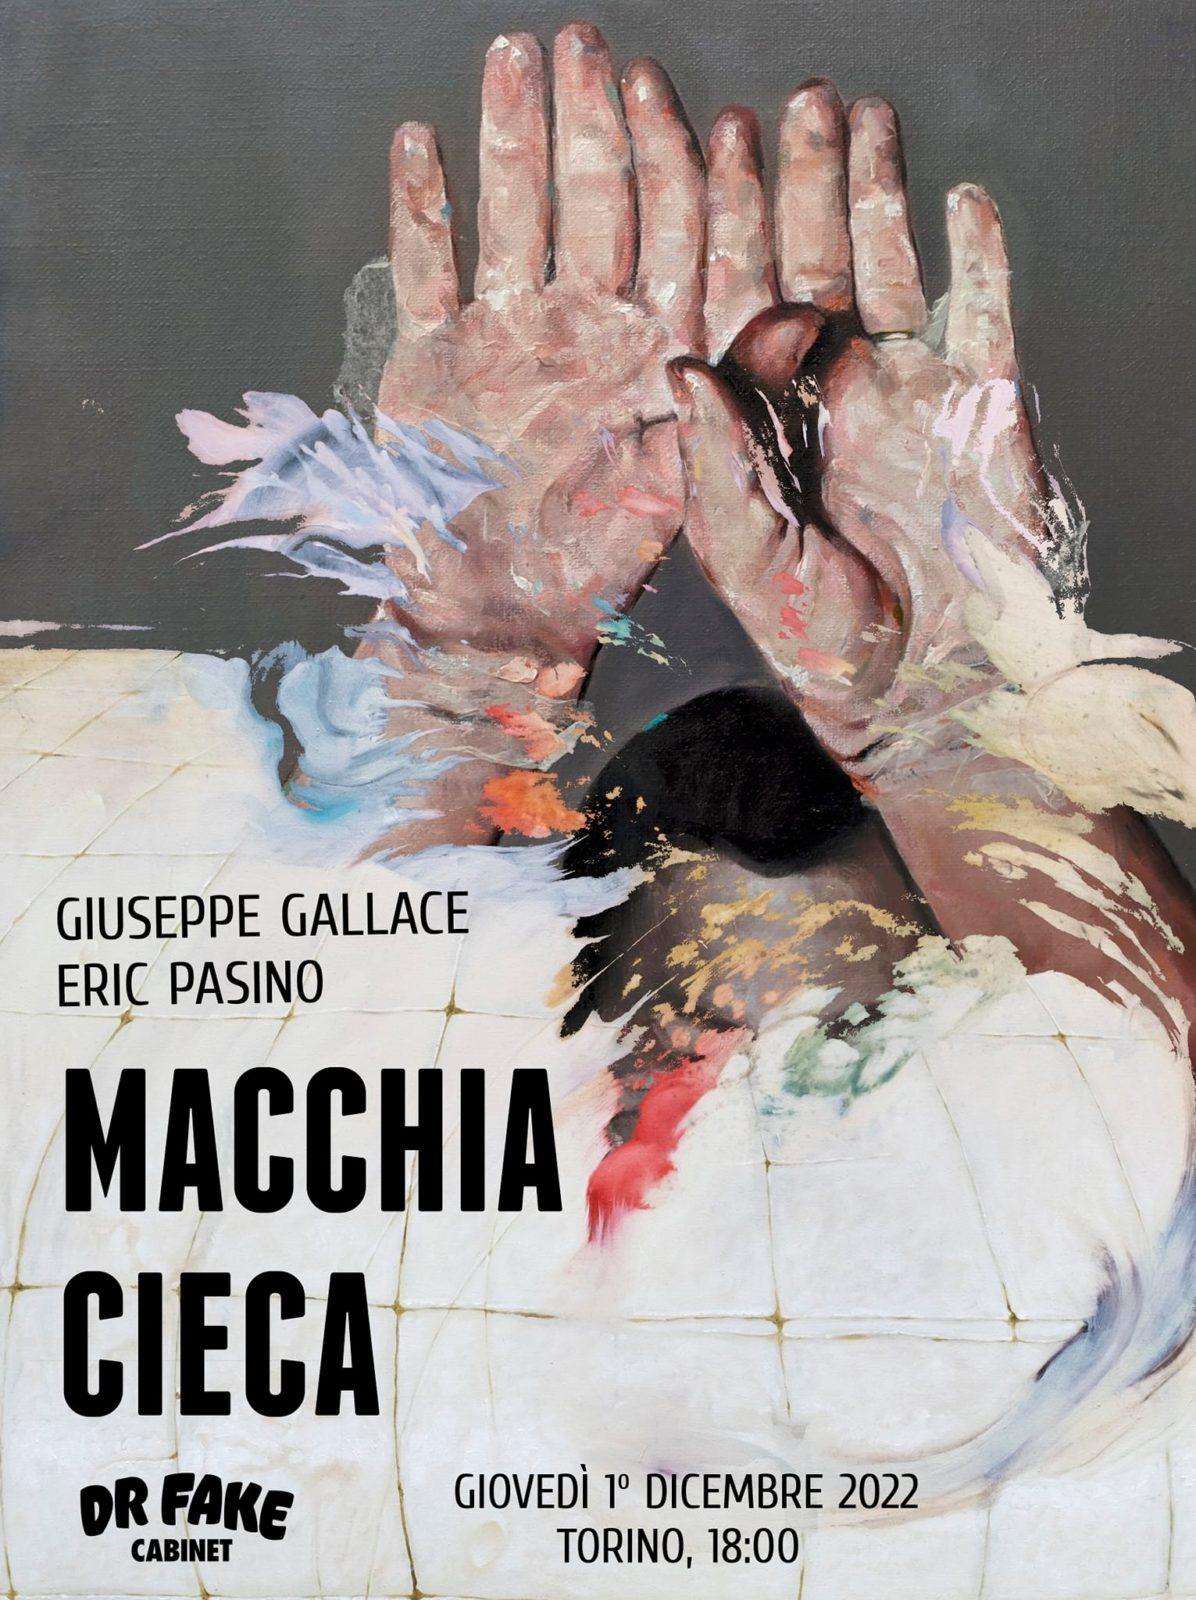 Macchia cieca - Dr Fake Cabinet a Torino